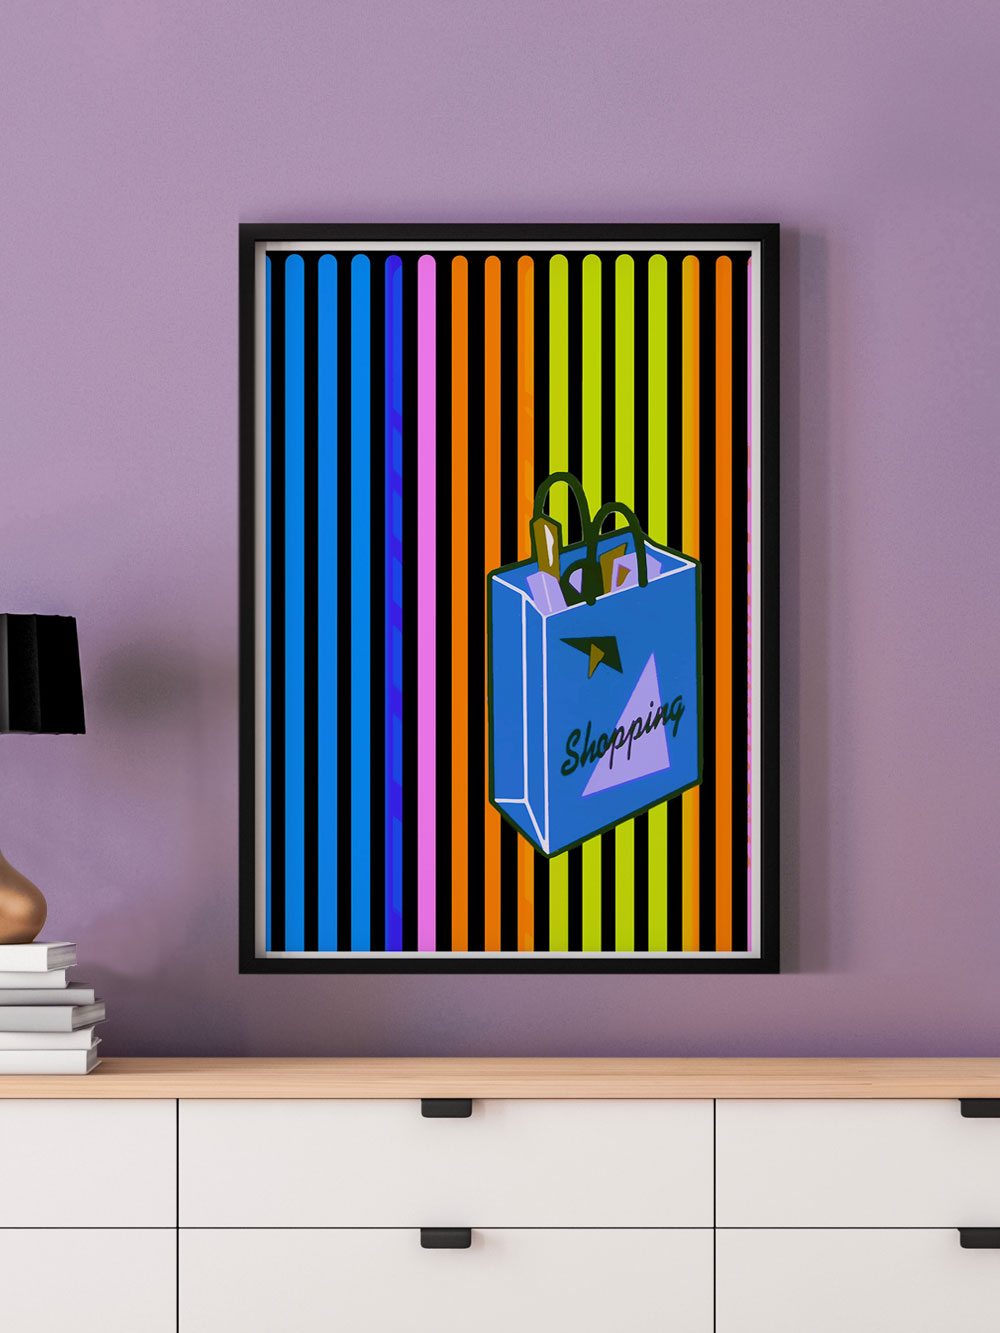 Shopping Streak Retro Art Print in a frame on a wall